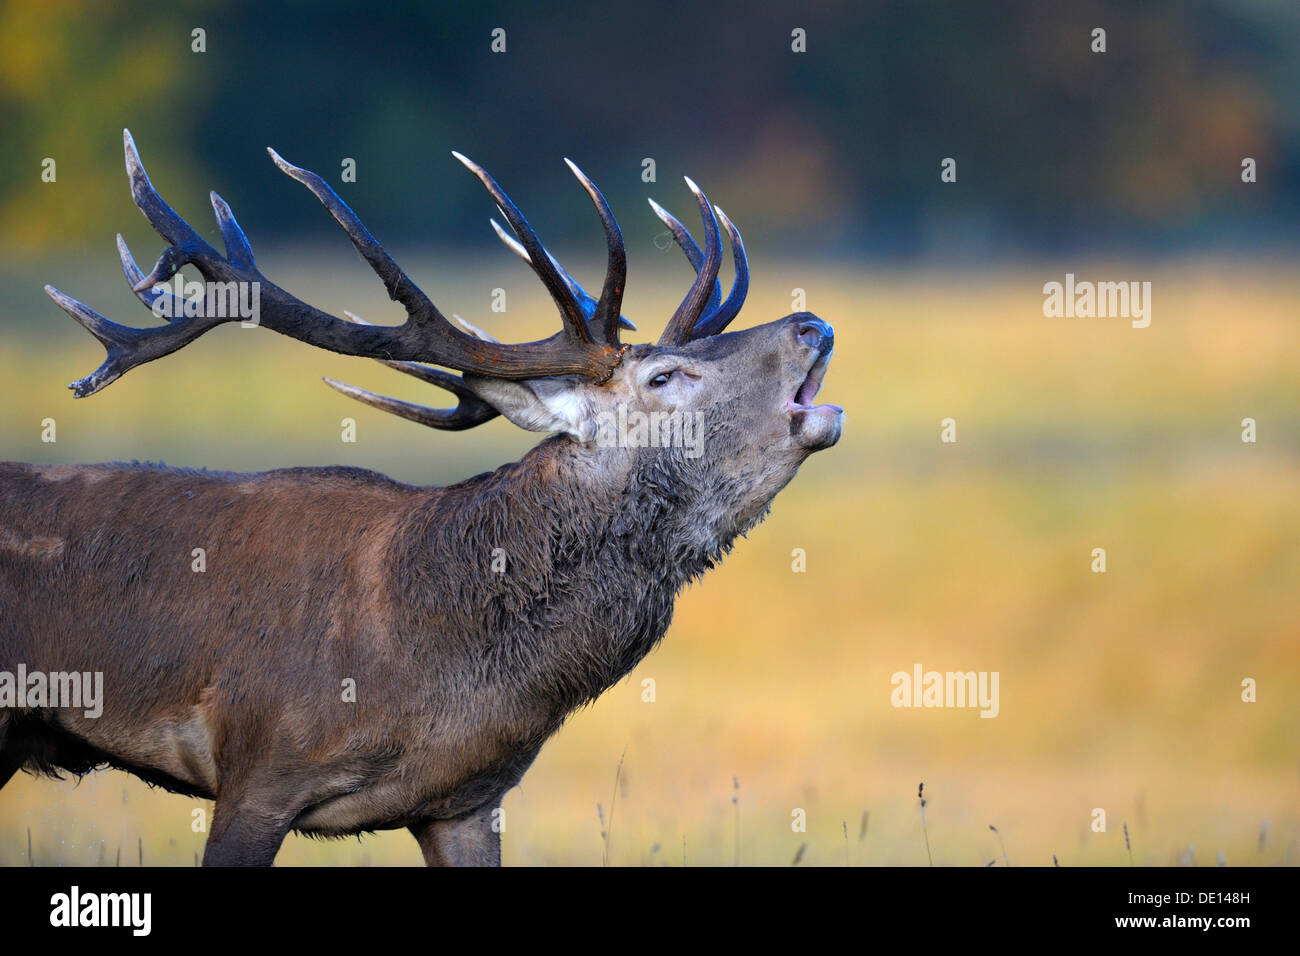 Red deer (Cervus elaphus), royal stag roaring, portrait, Jaegersborg, Denmark, Scandinavia, Europe Stock Photo